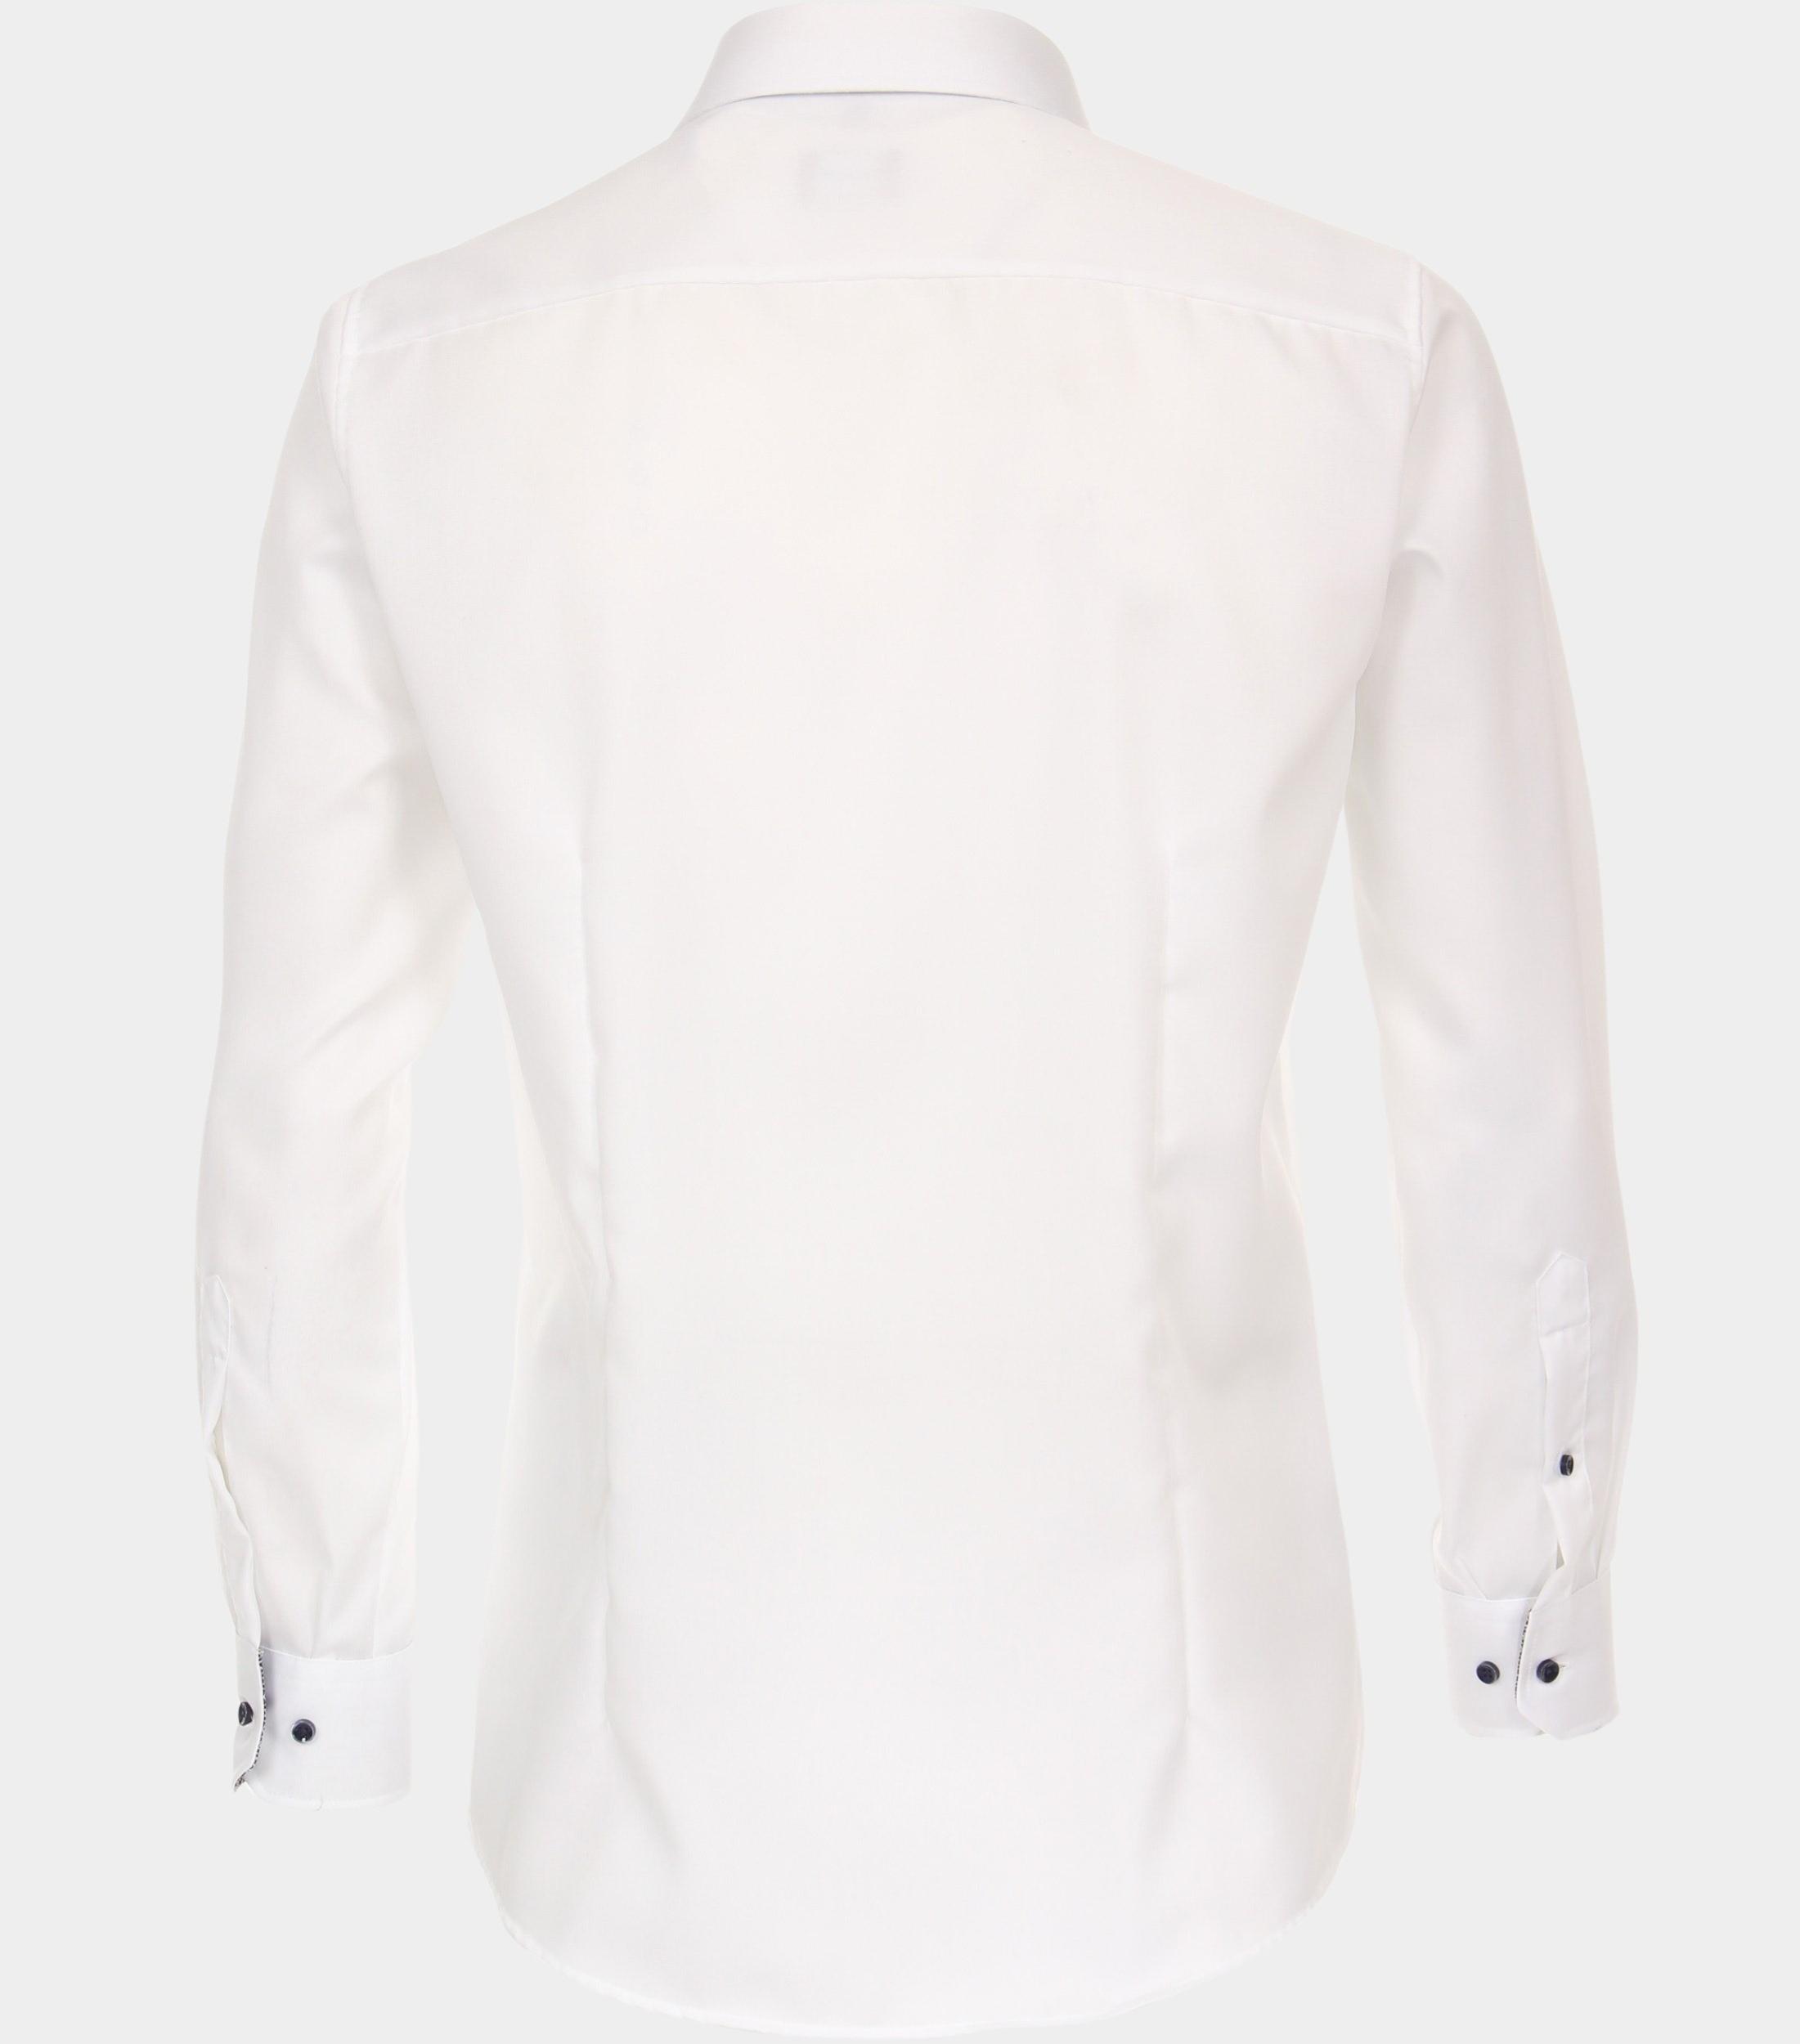 Venti Business hemd lange mouw Wit Hai Modern Fit 103522200/000